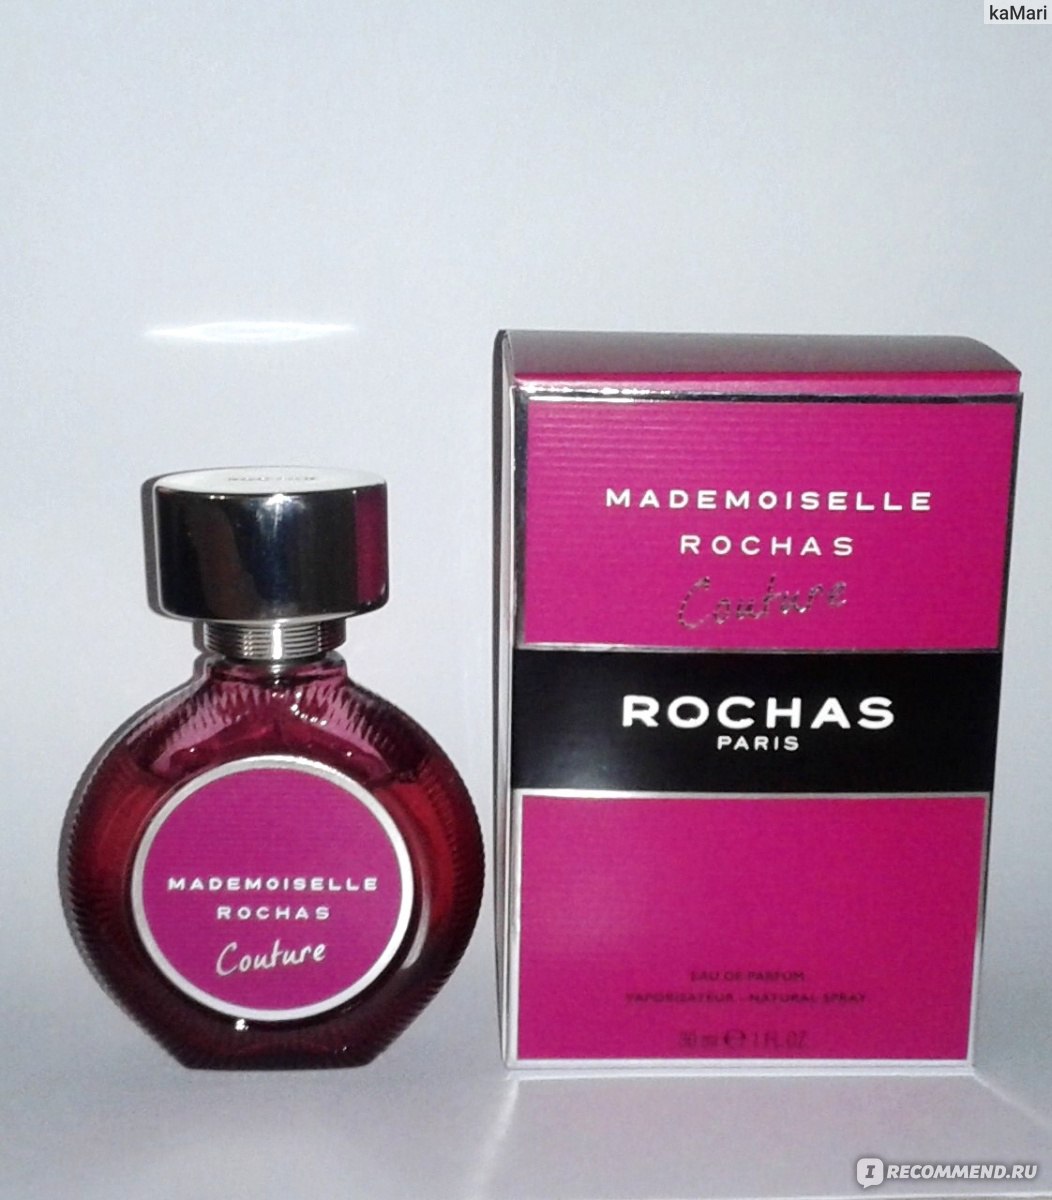 Rochas mademoiselle rochas отзывы. Rochas Mademoiselle парфюмерная вода. Mademoiselle Rochas от Rochas. Парфюмерная вода Rochas Mademoiselle Rochas. Madmuazel Rochas духи.